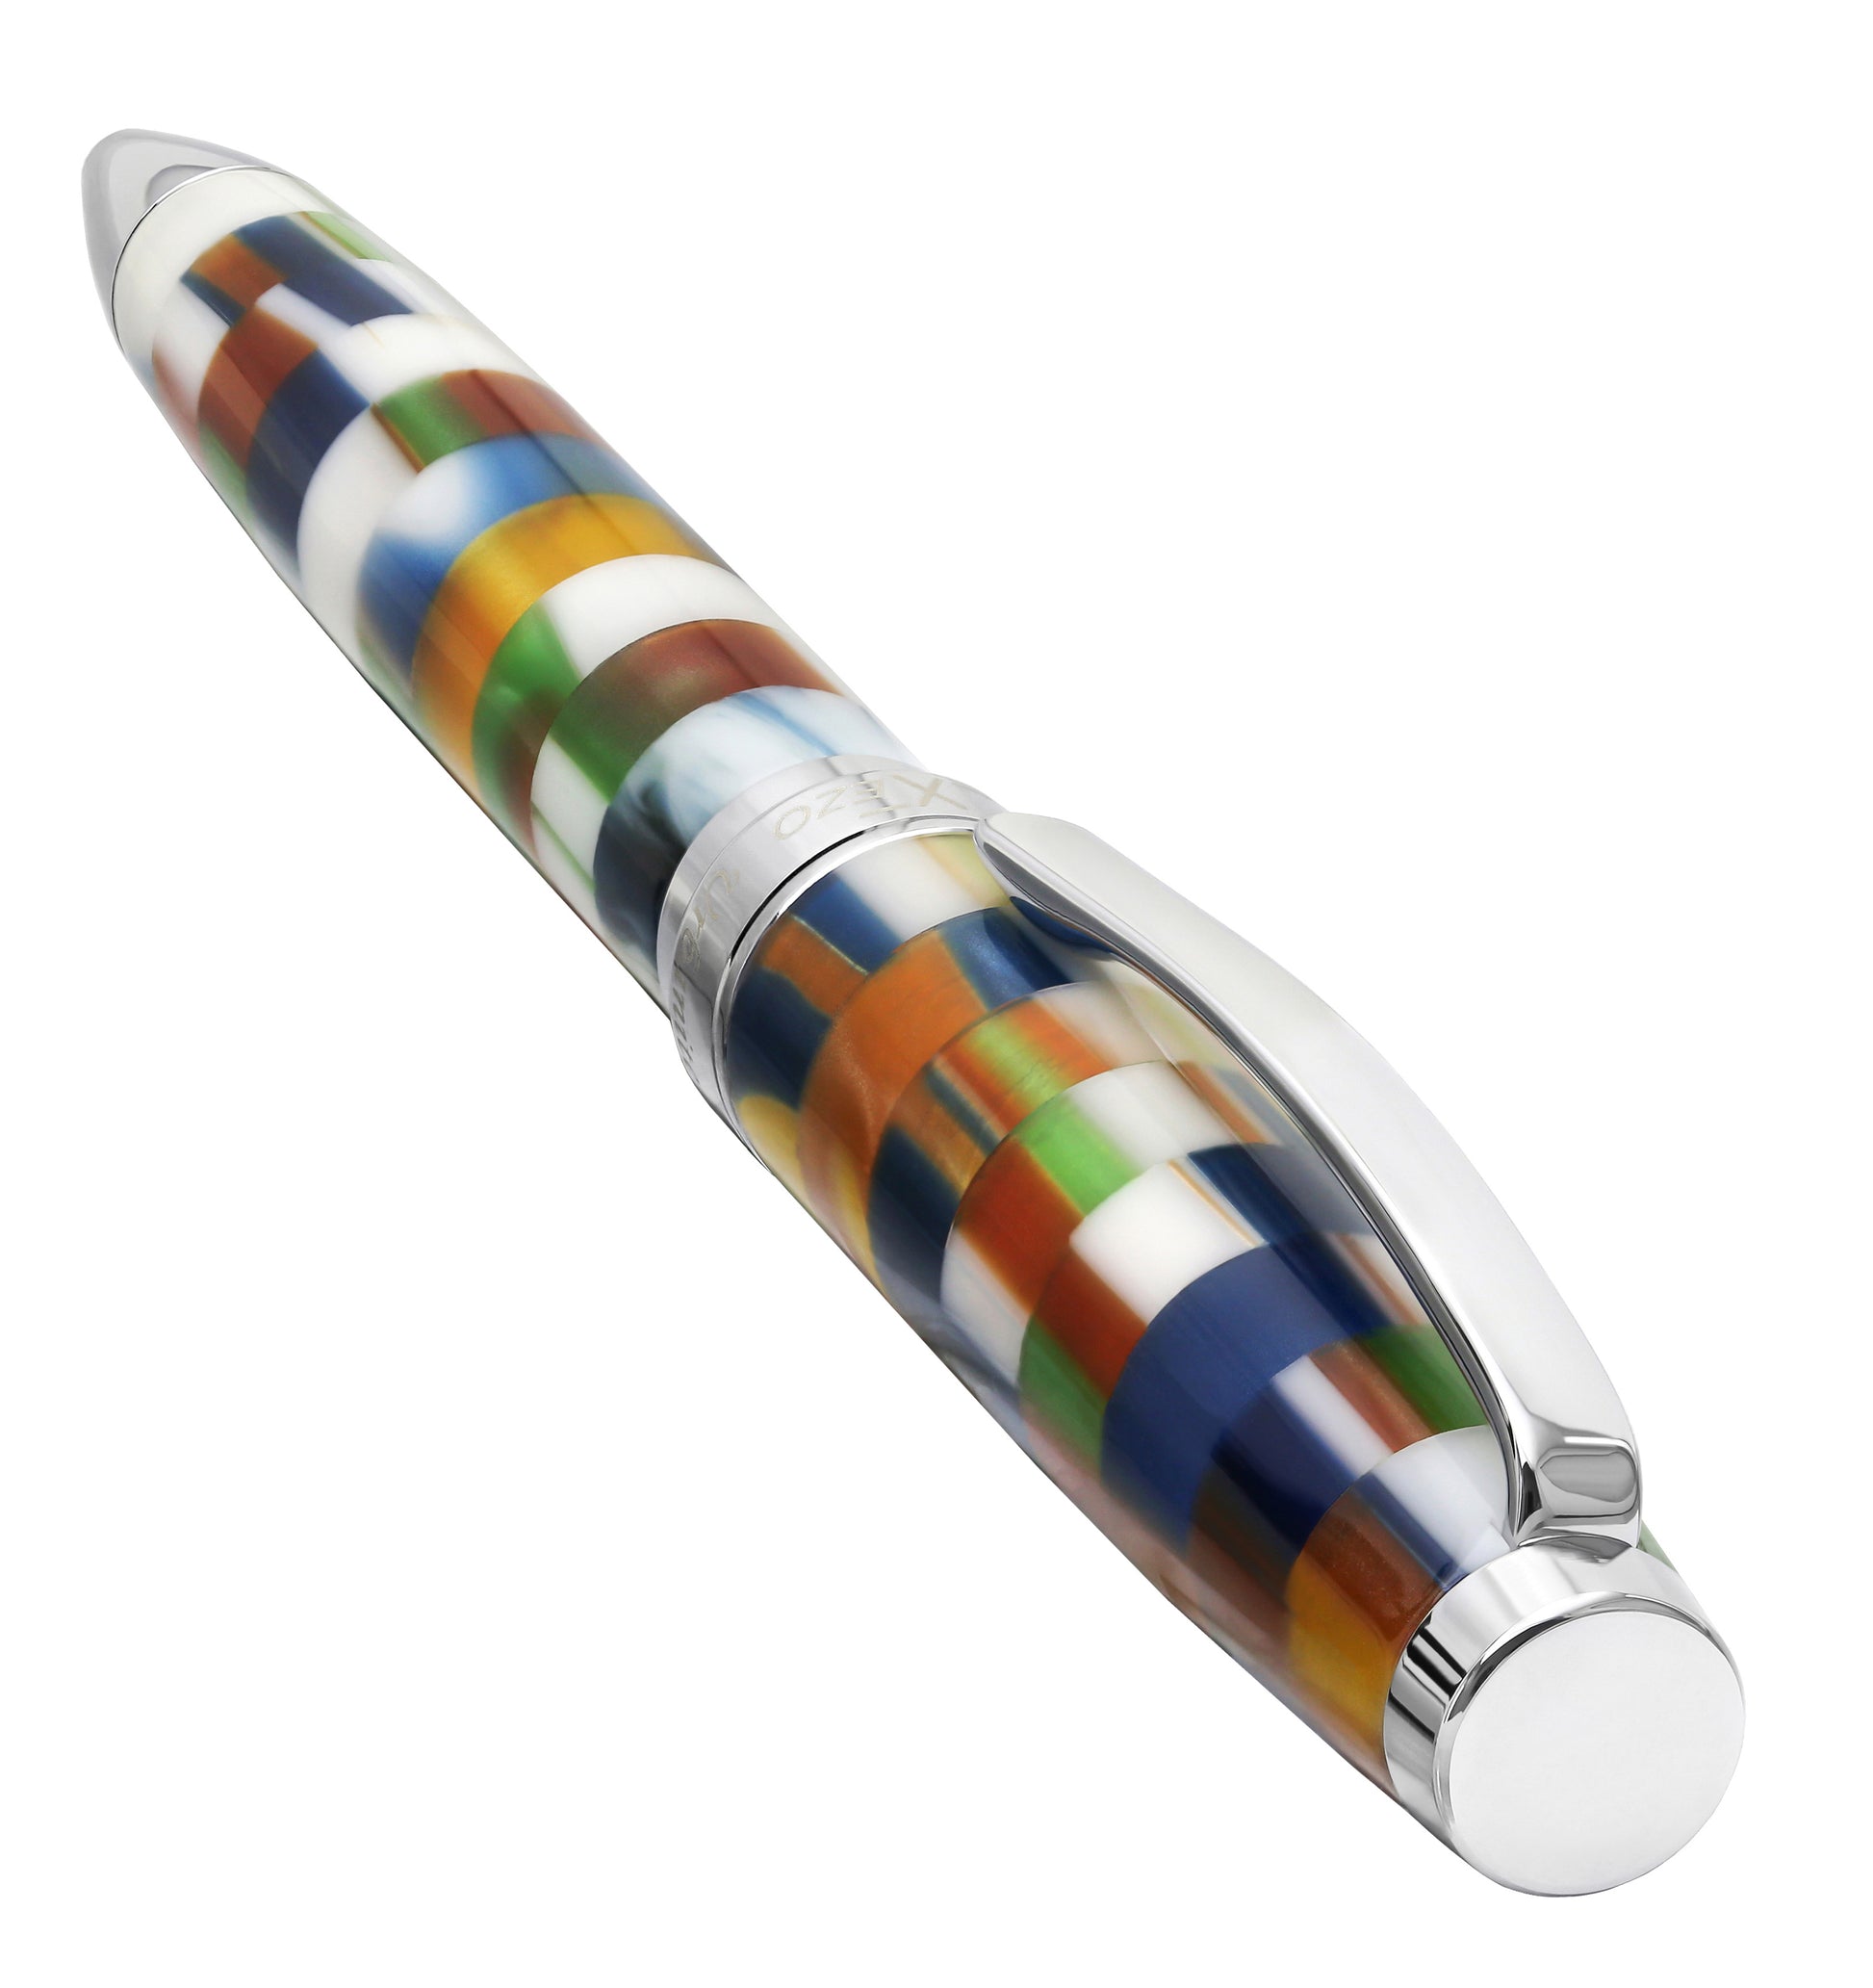 Xezo - Angled 3D view of the back of the Urbanite II Jazz B ballpoint pen